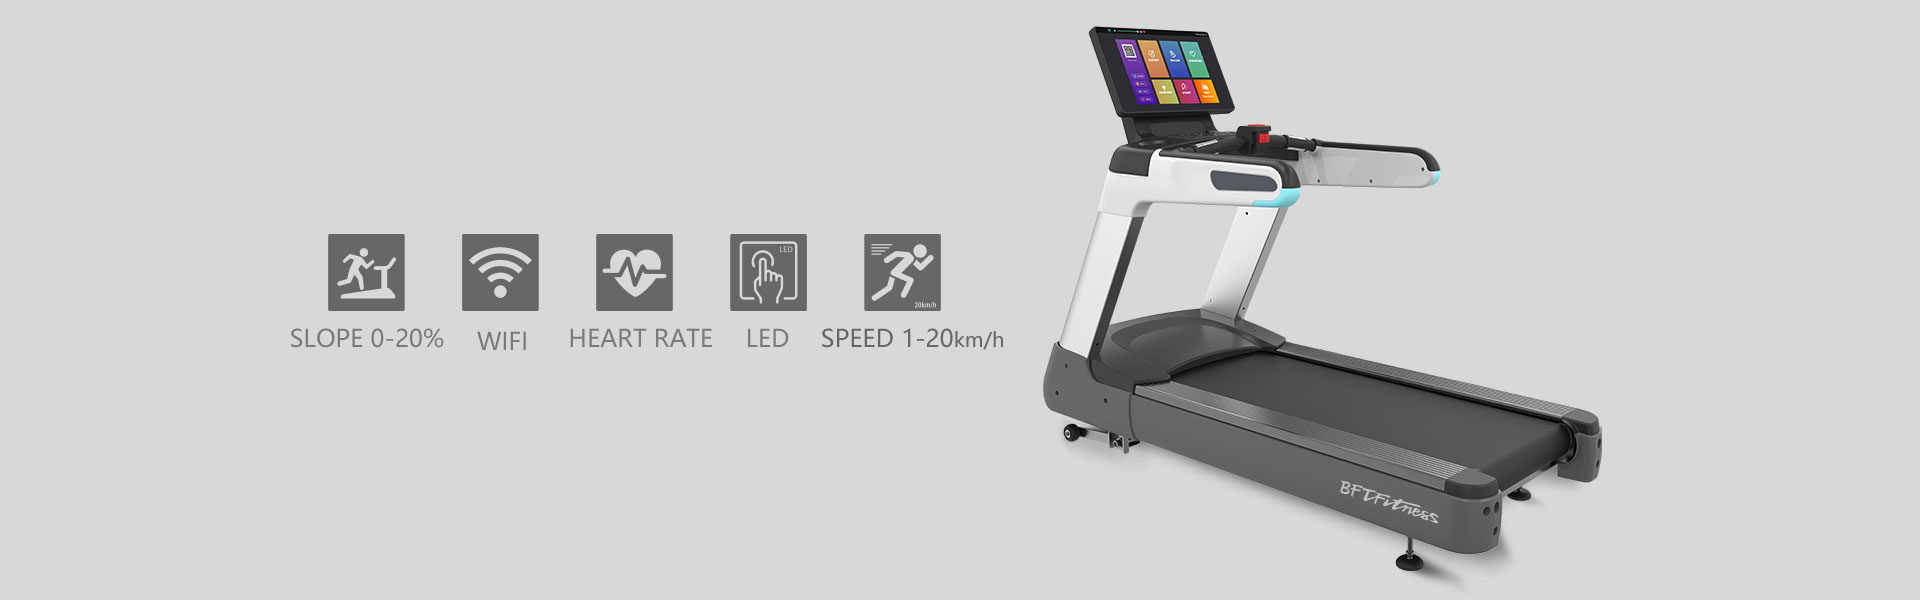 Commercial Treadmill BCT-06 / BCT-06S